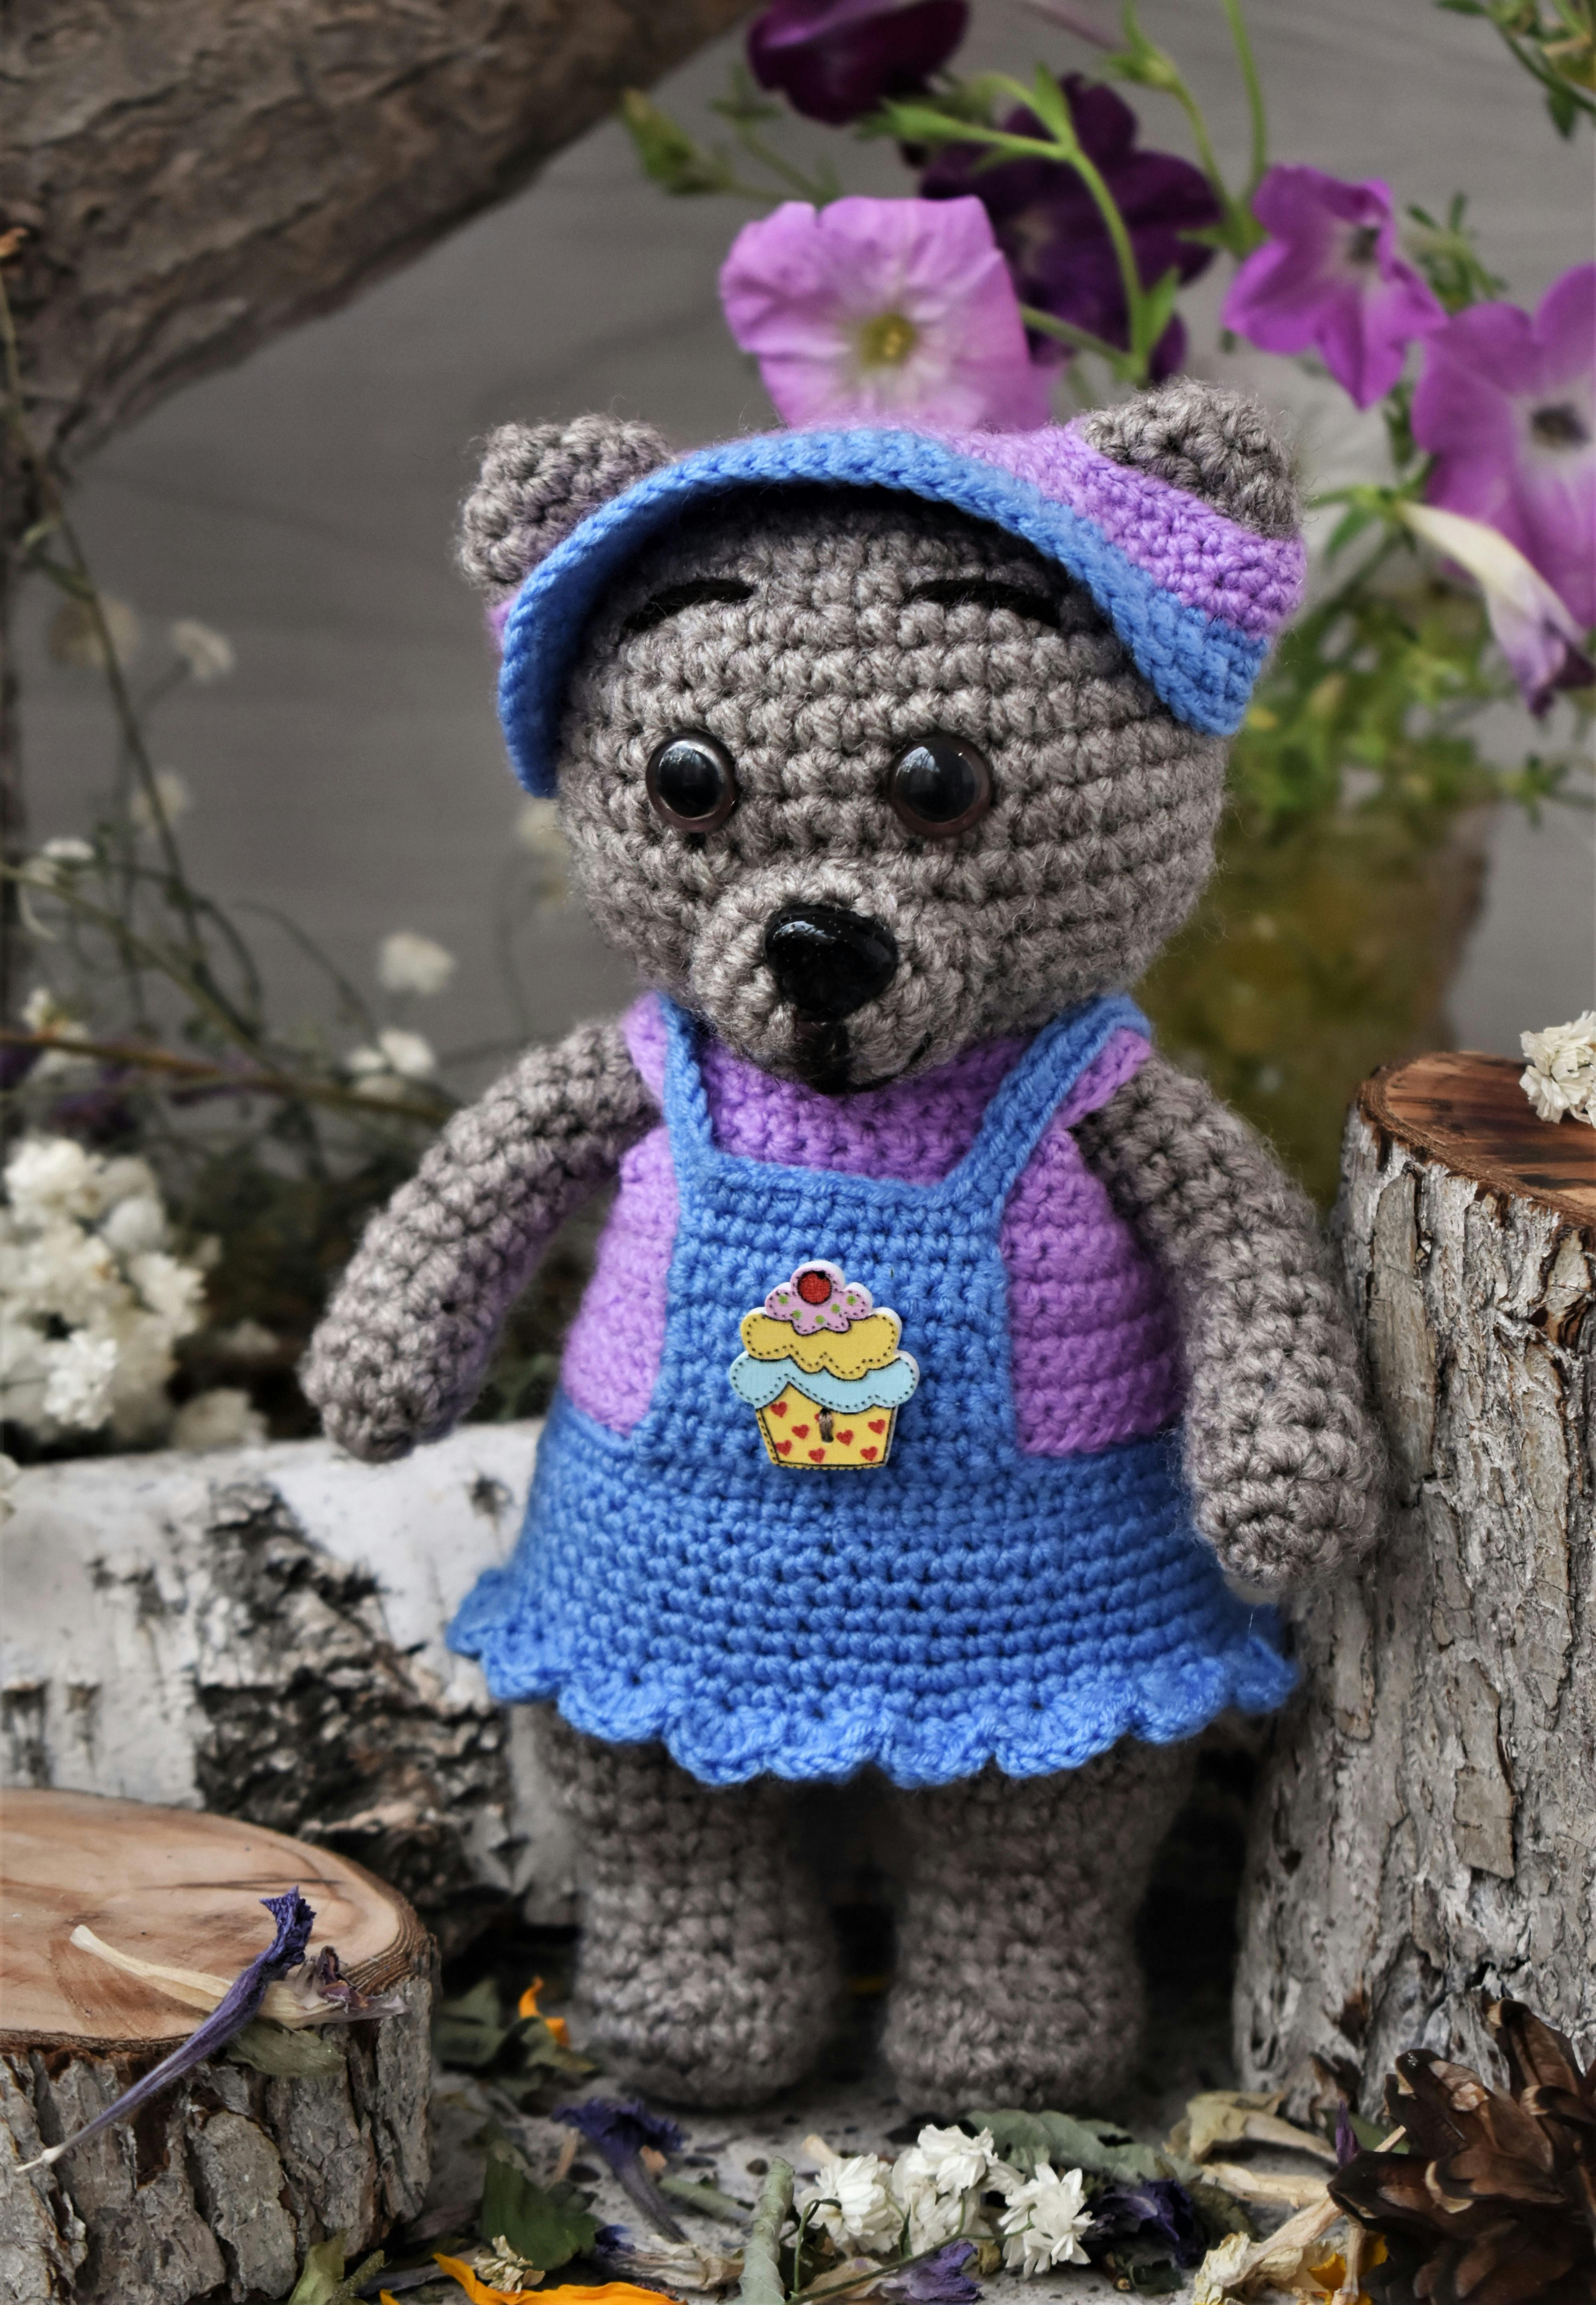 Teddy Bear Plush Toys Beside Black Camera on Tree Log · Free Stock Photo